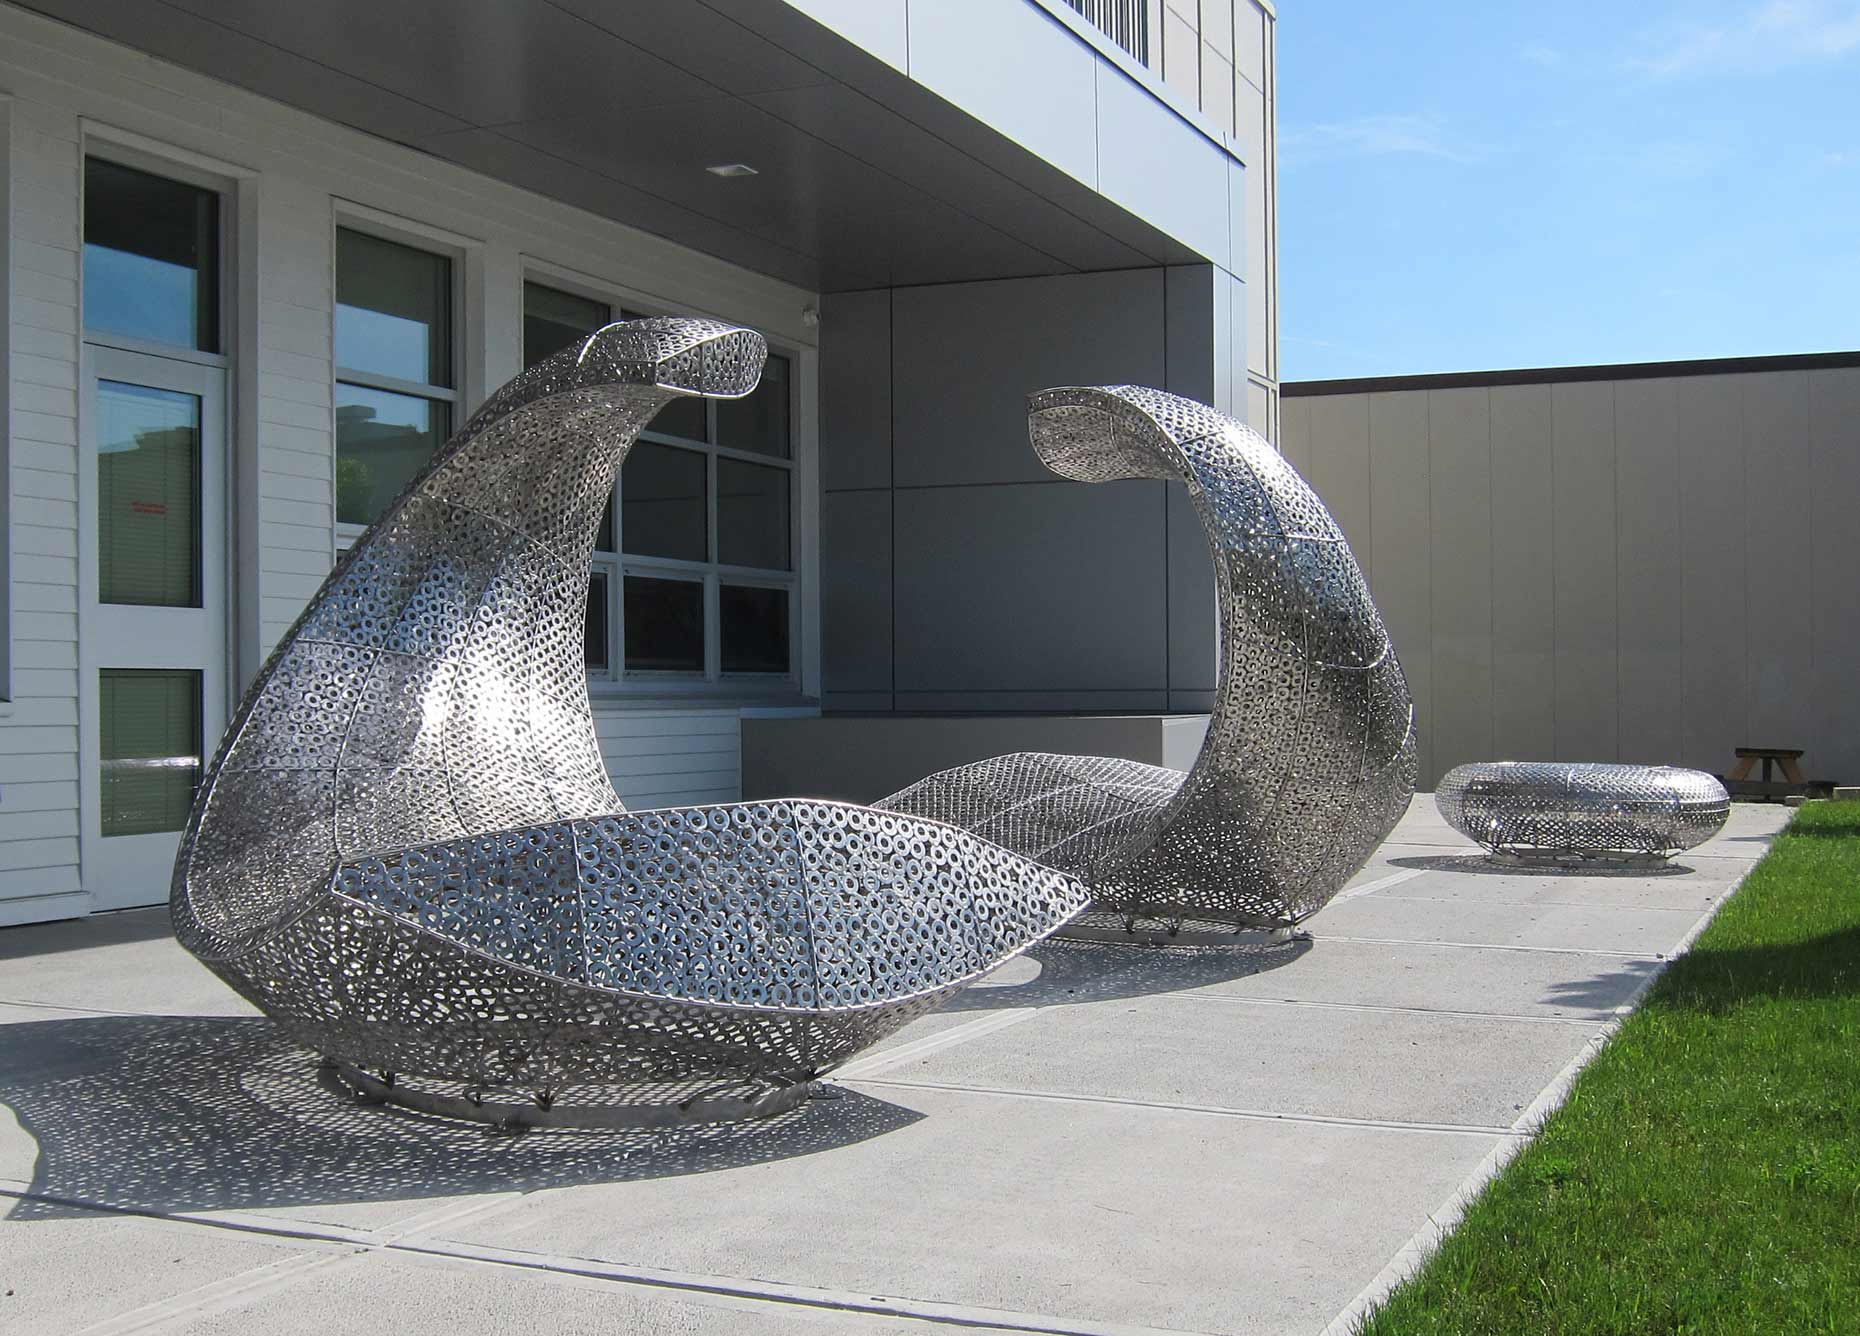 Making Waves_1 sculptural seating and public art installation by Peter Diepenbrock  East Bay Met School  Newport Rhode island